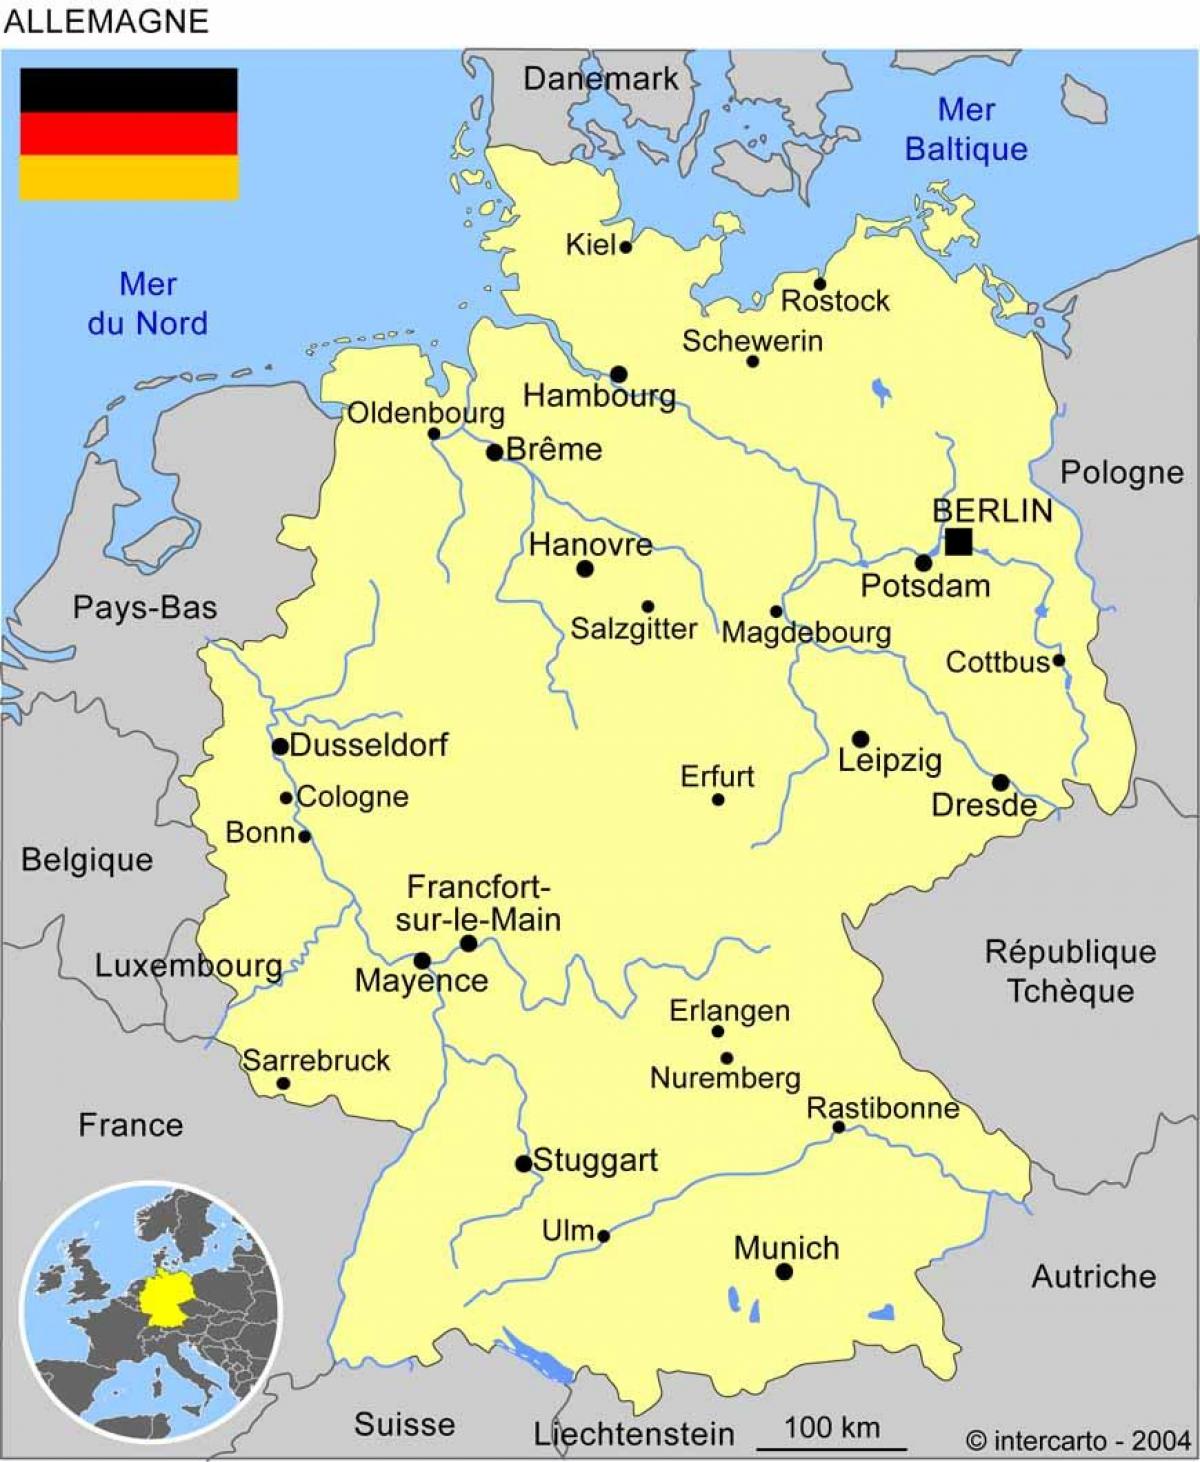 Mappa del paese Germania